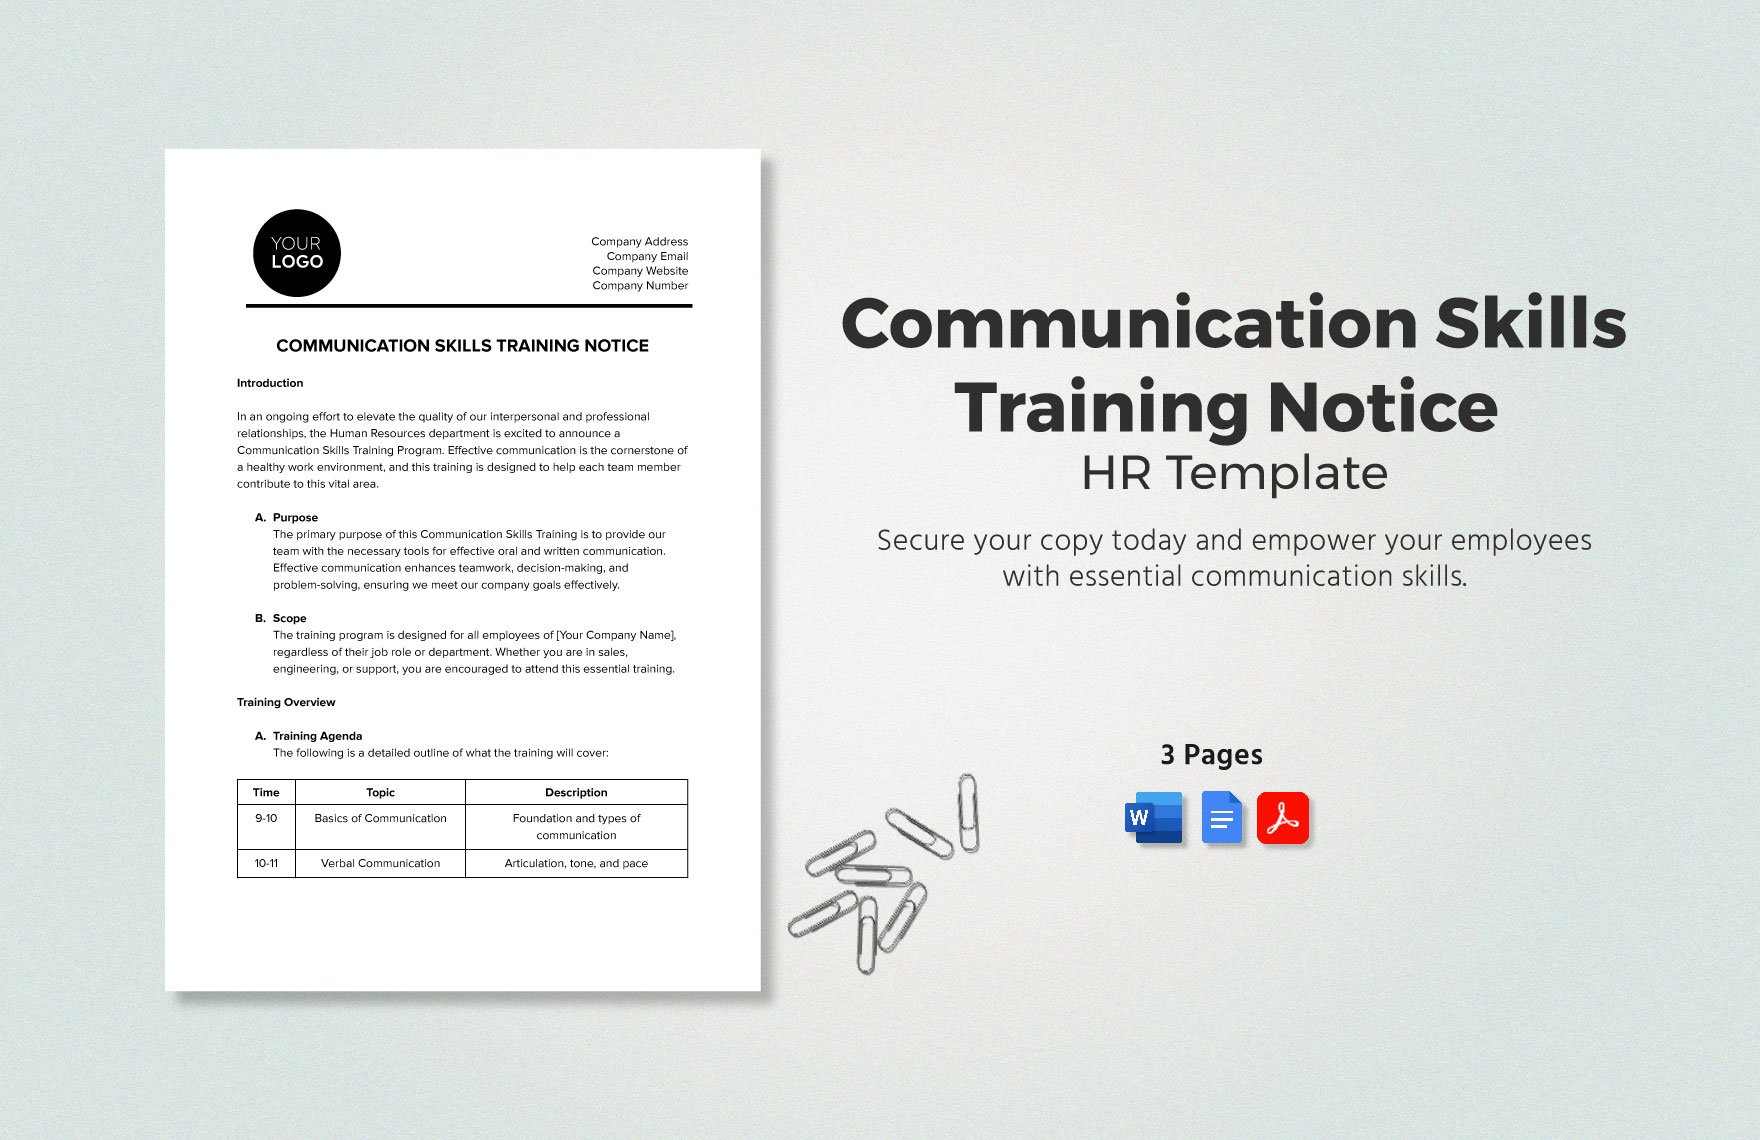 Communication Skills Training Notice HR Template